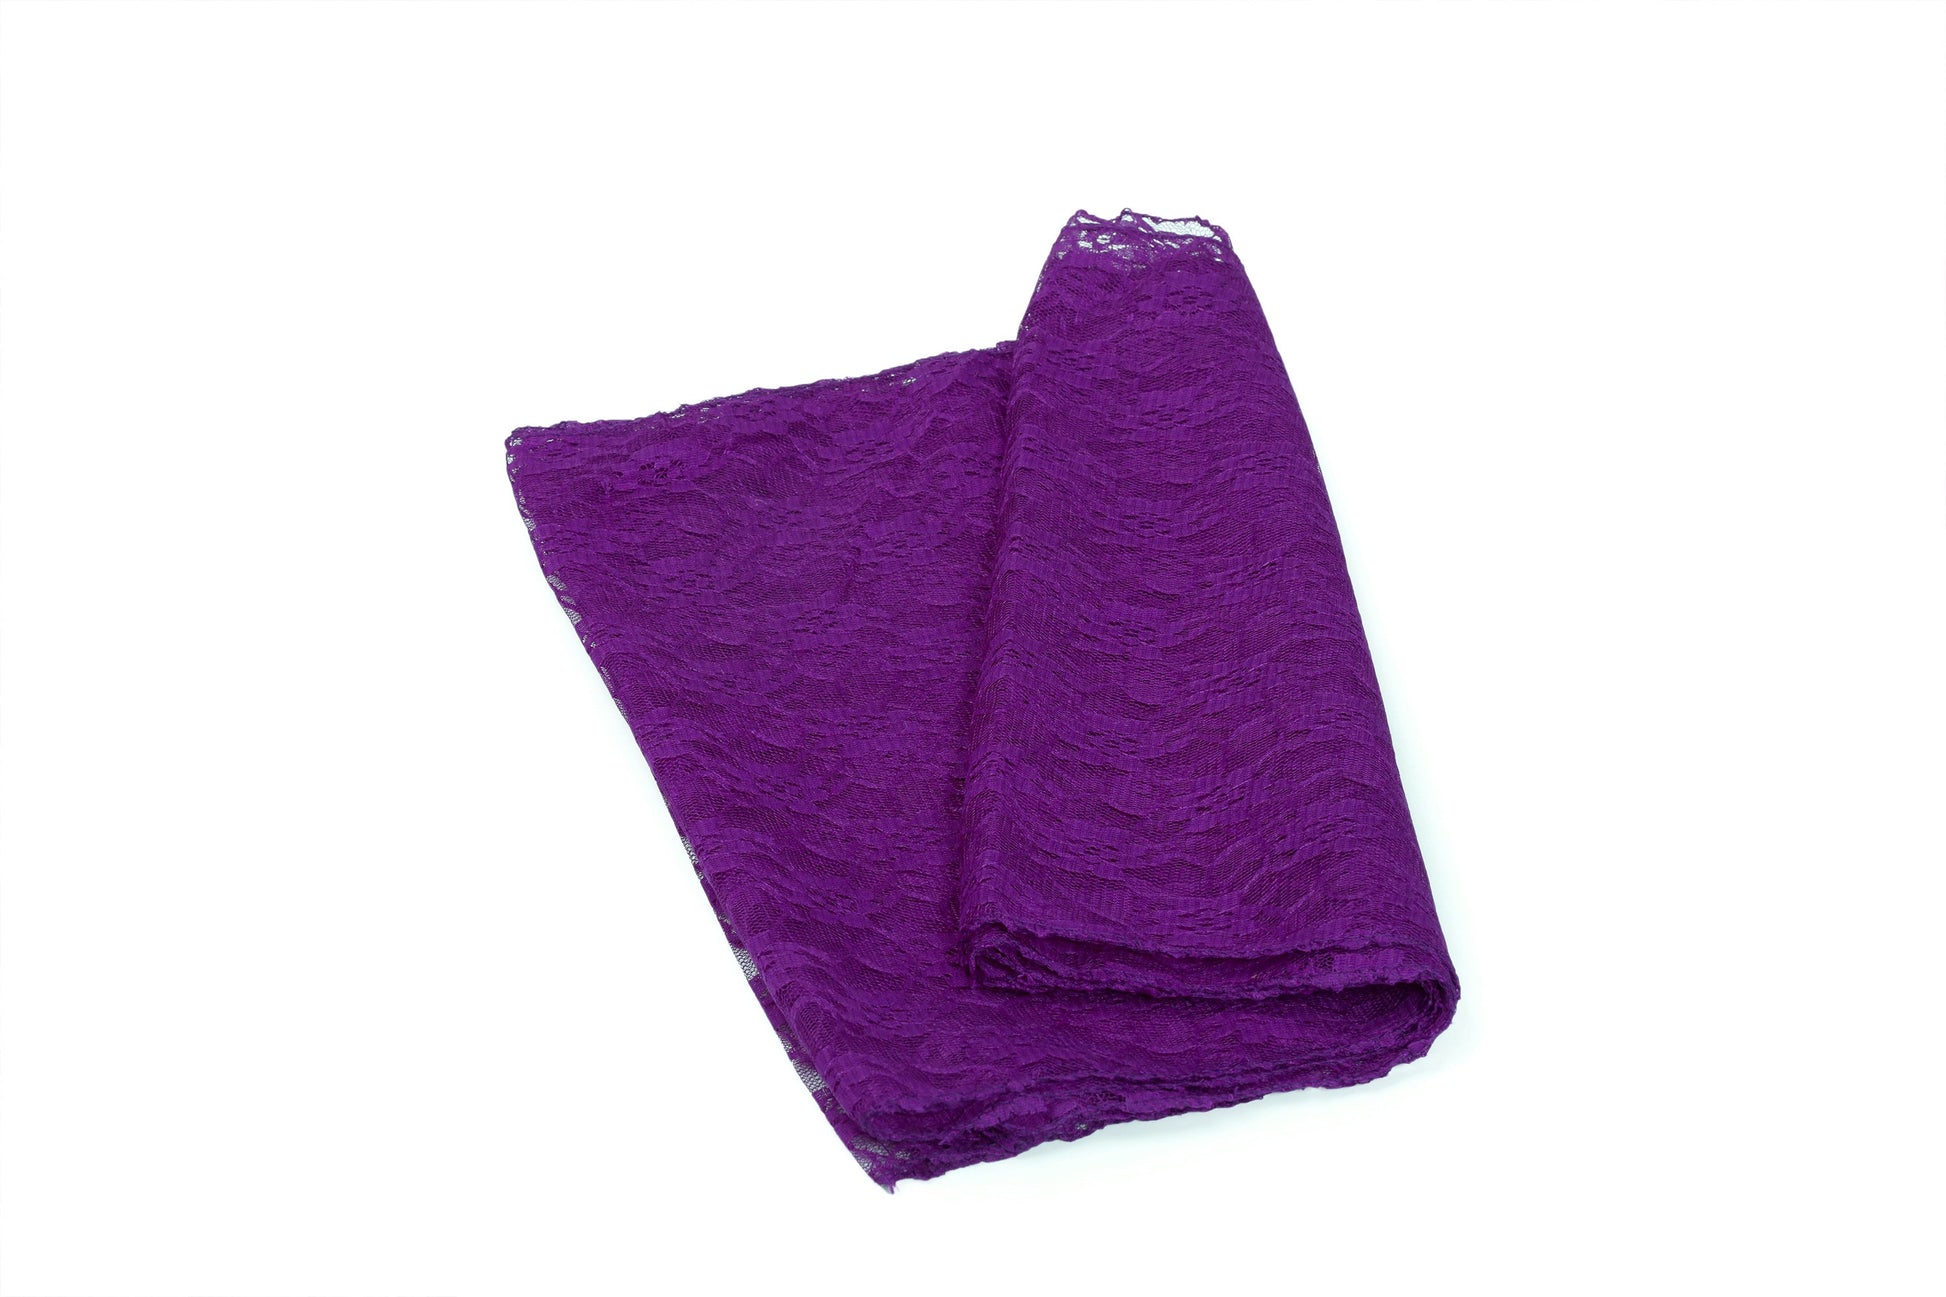 Cadbury Purple,f802f2d4-1dc4-4d3d-8ab9-88b869ae0c64